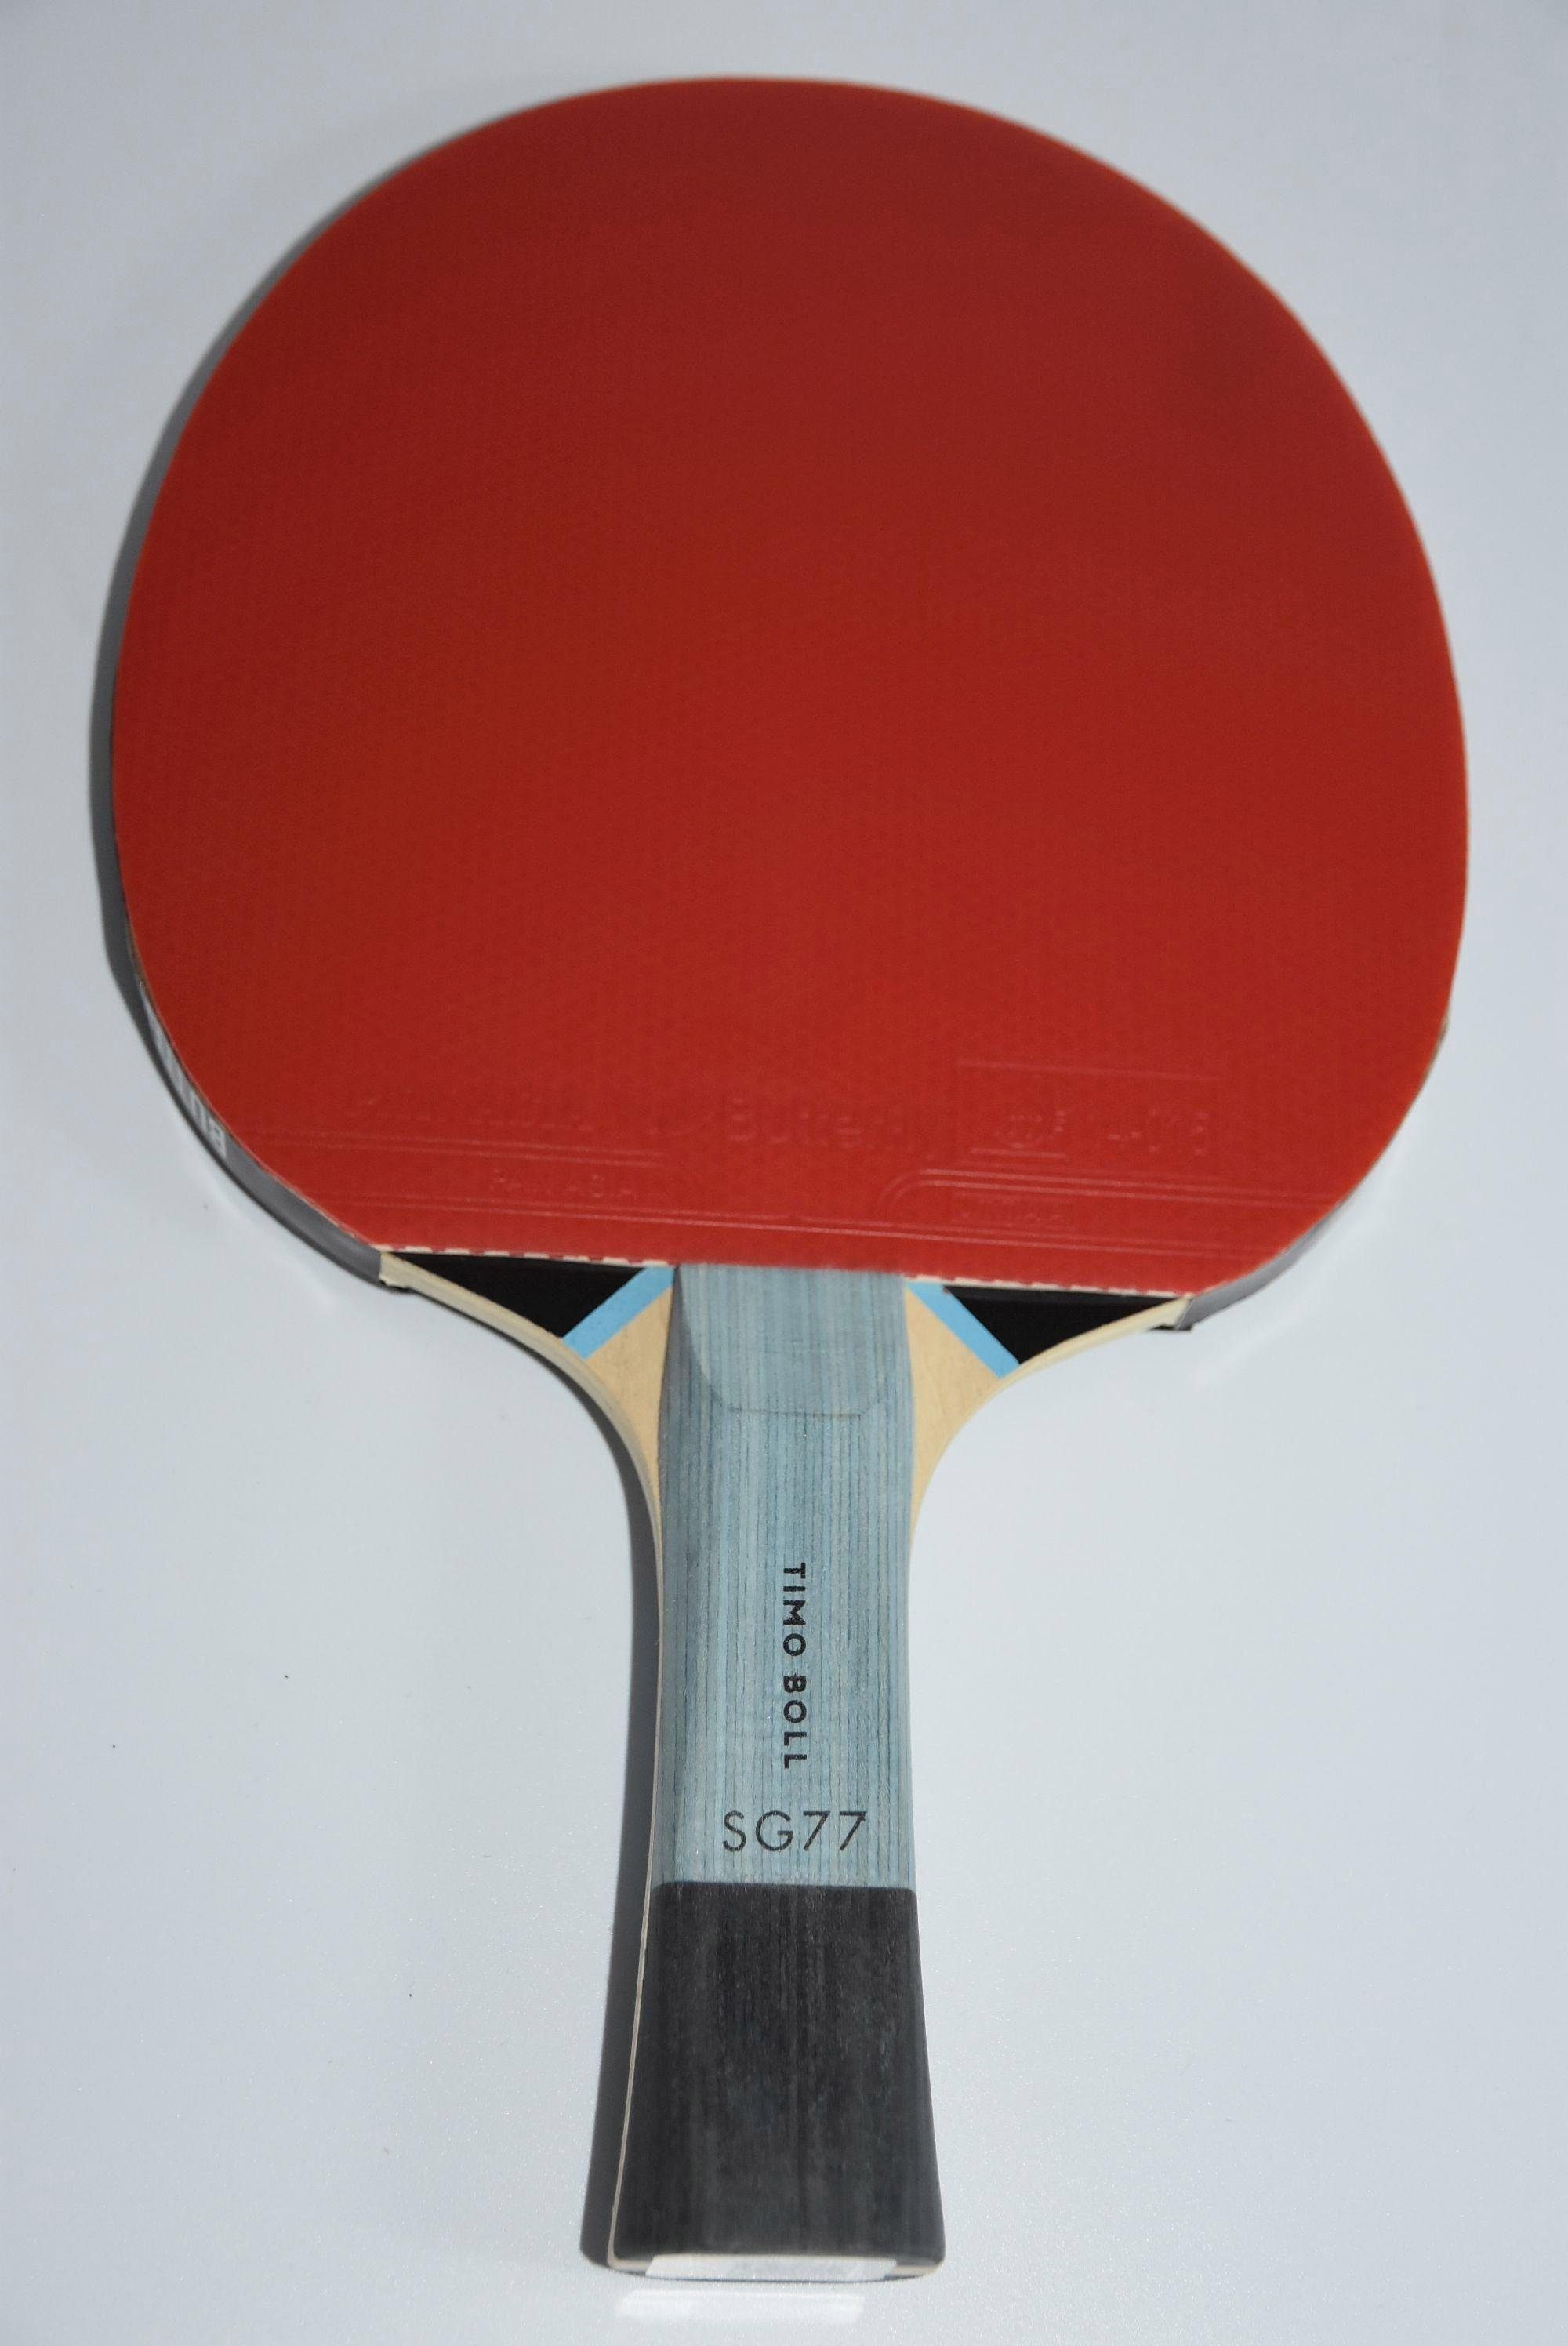 Grifftechnologie Timo SG77, Boll Einzigartige Butterfly "smart.grip" Tischtennisschläger